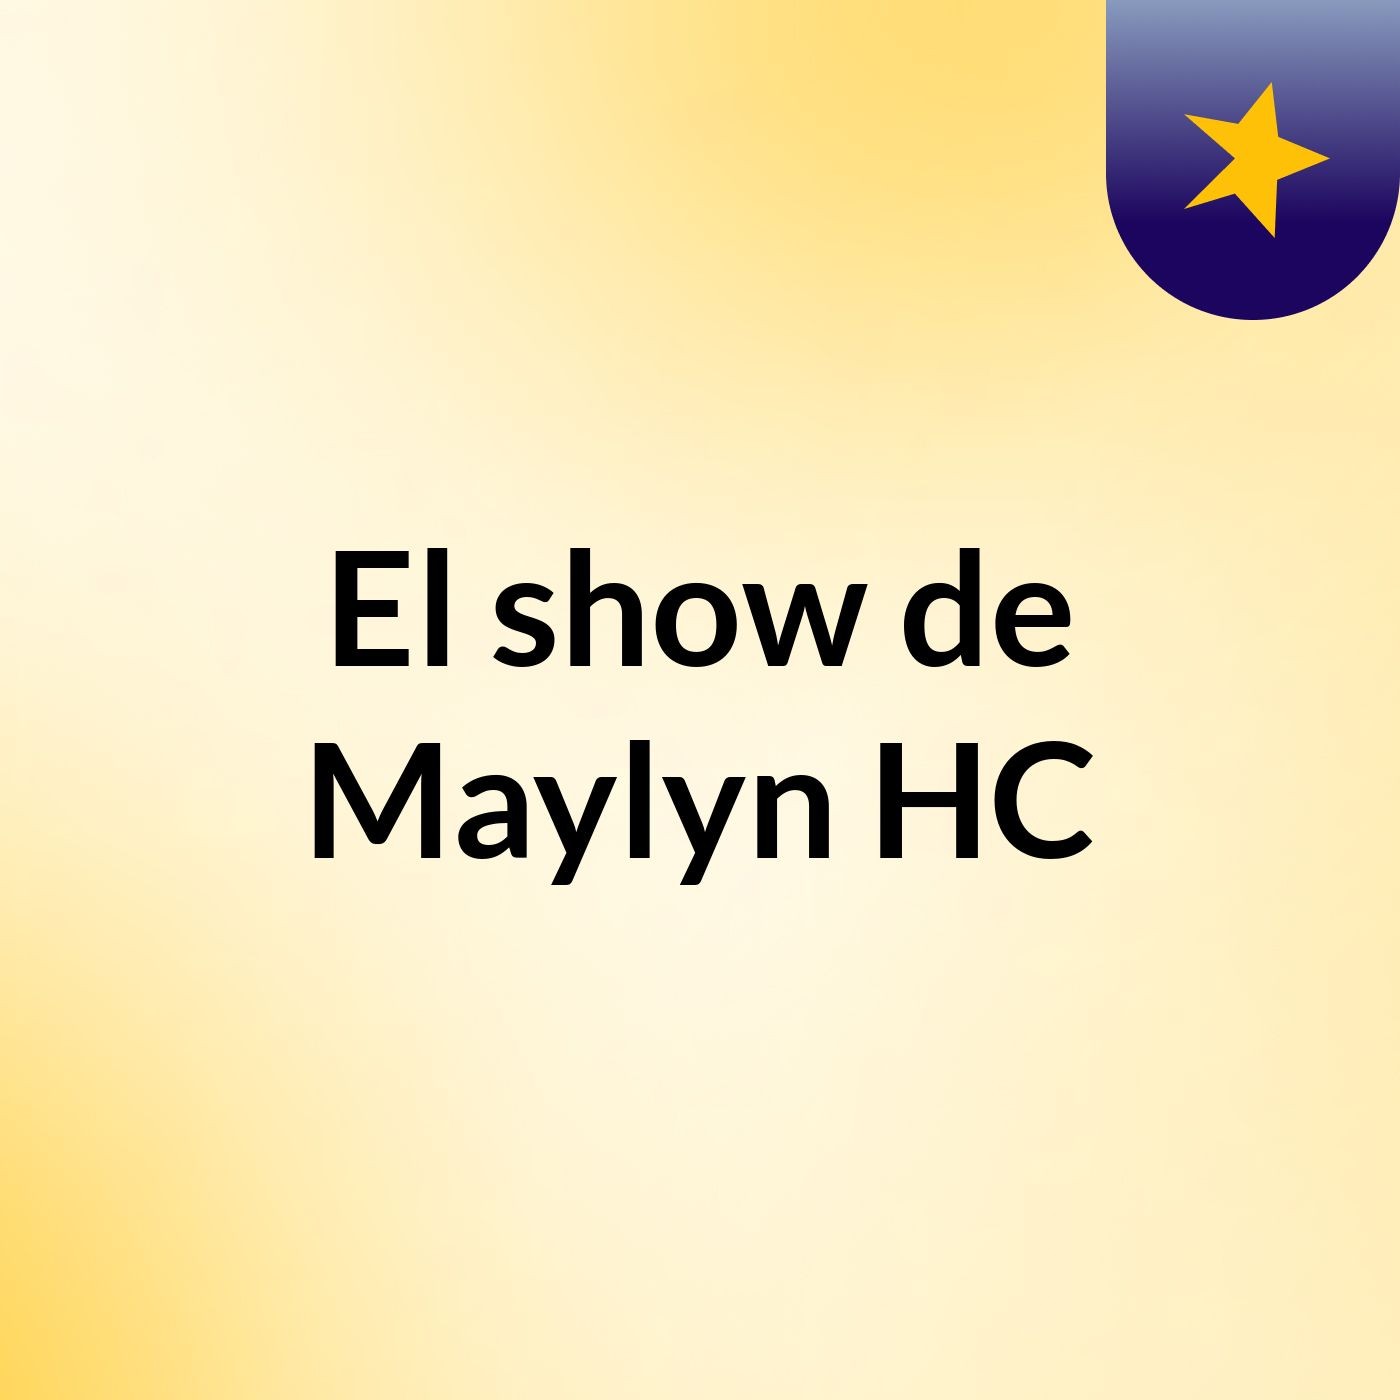 El show de Maylyn HC